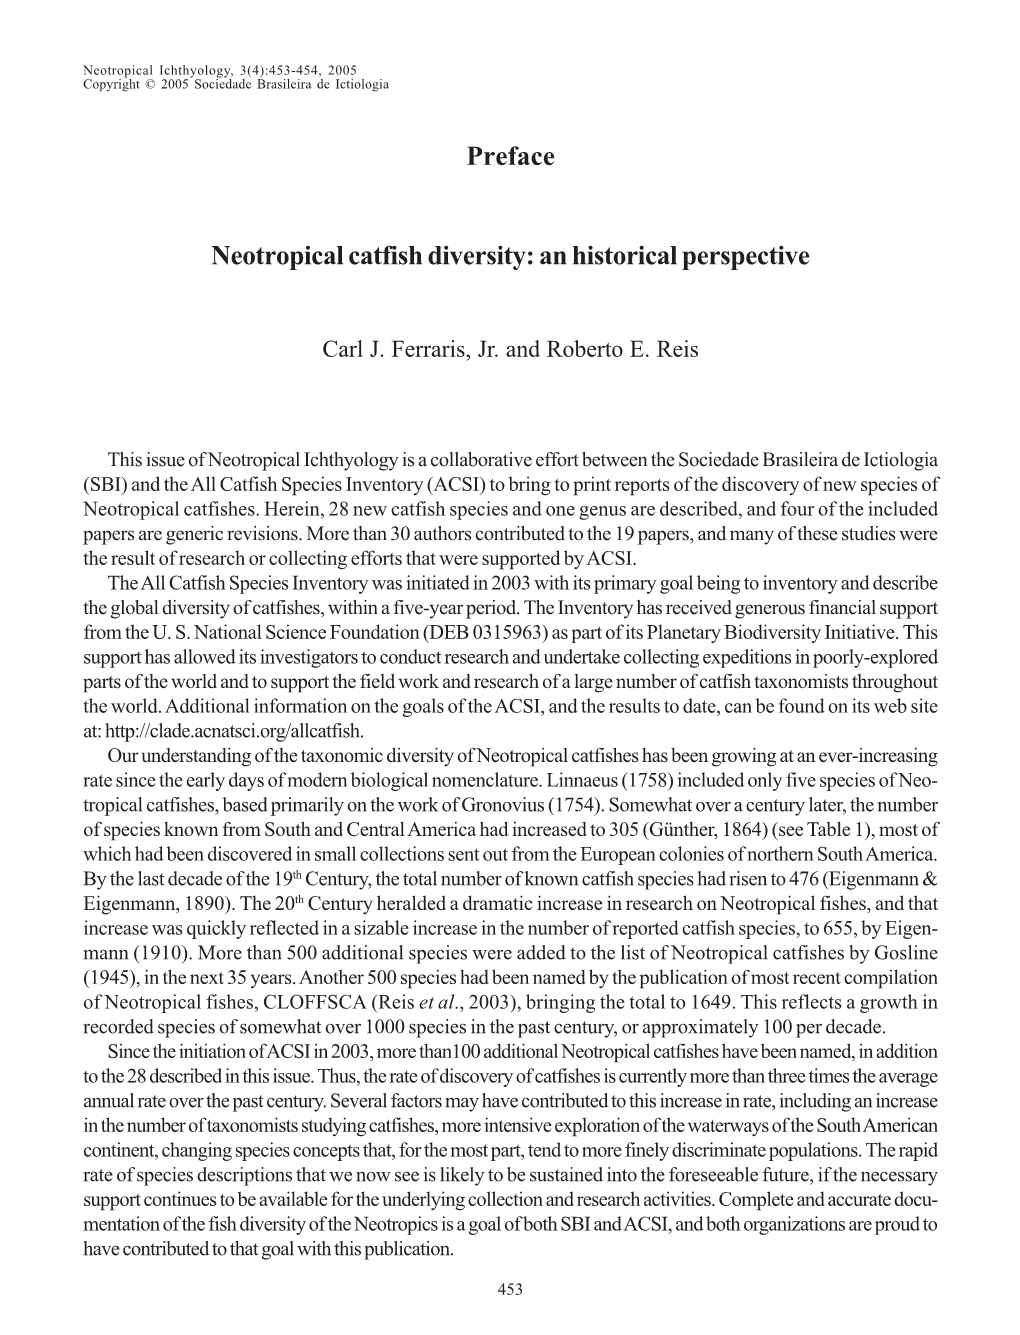 Preface Neotropical Catfish Diversity